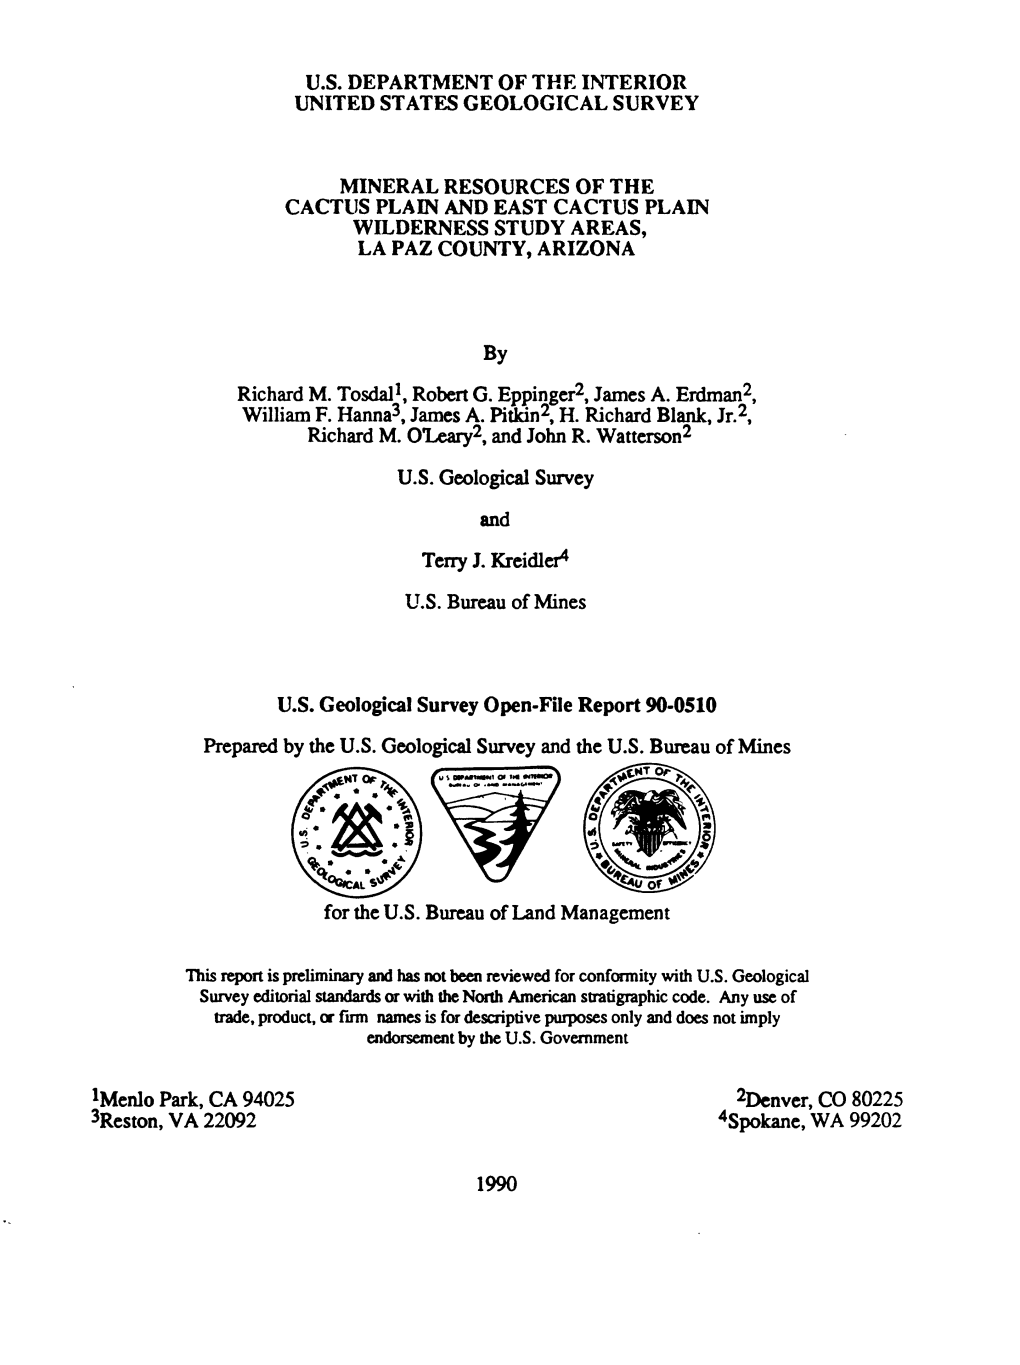 U.S. Geological Survey Open-File Report 90-0510 Prepared by the U.S